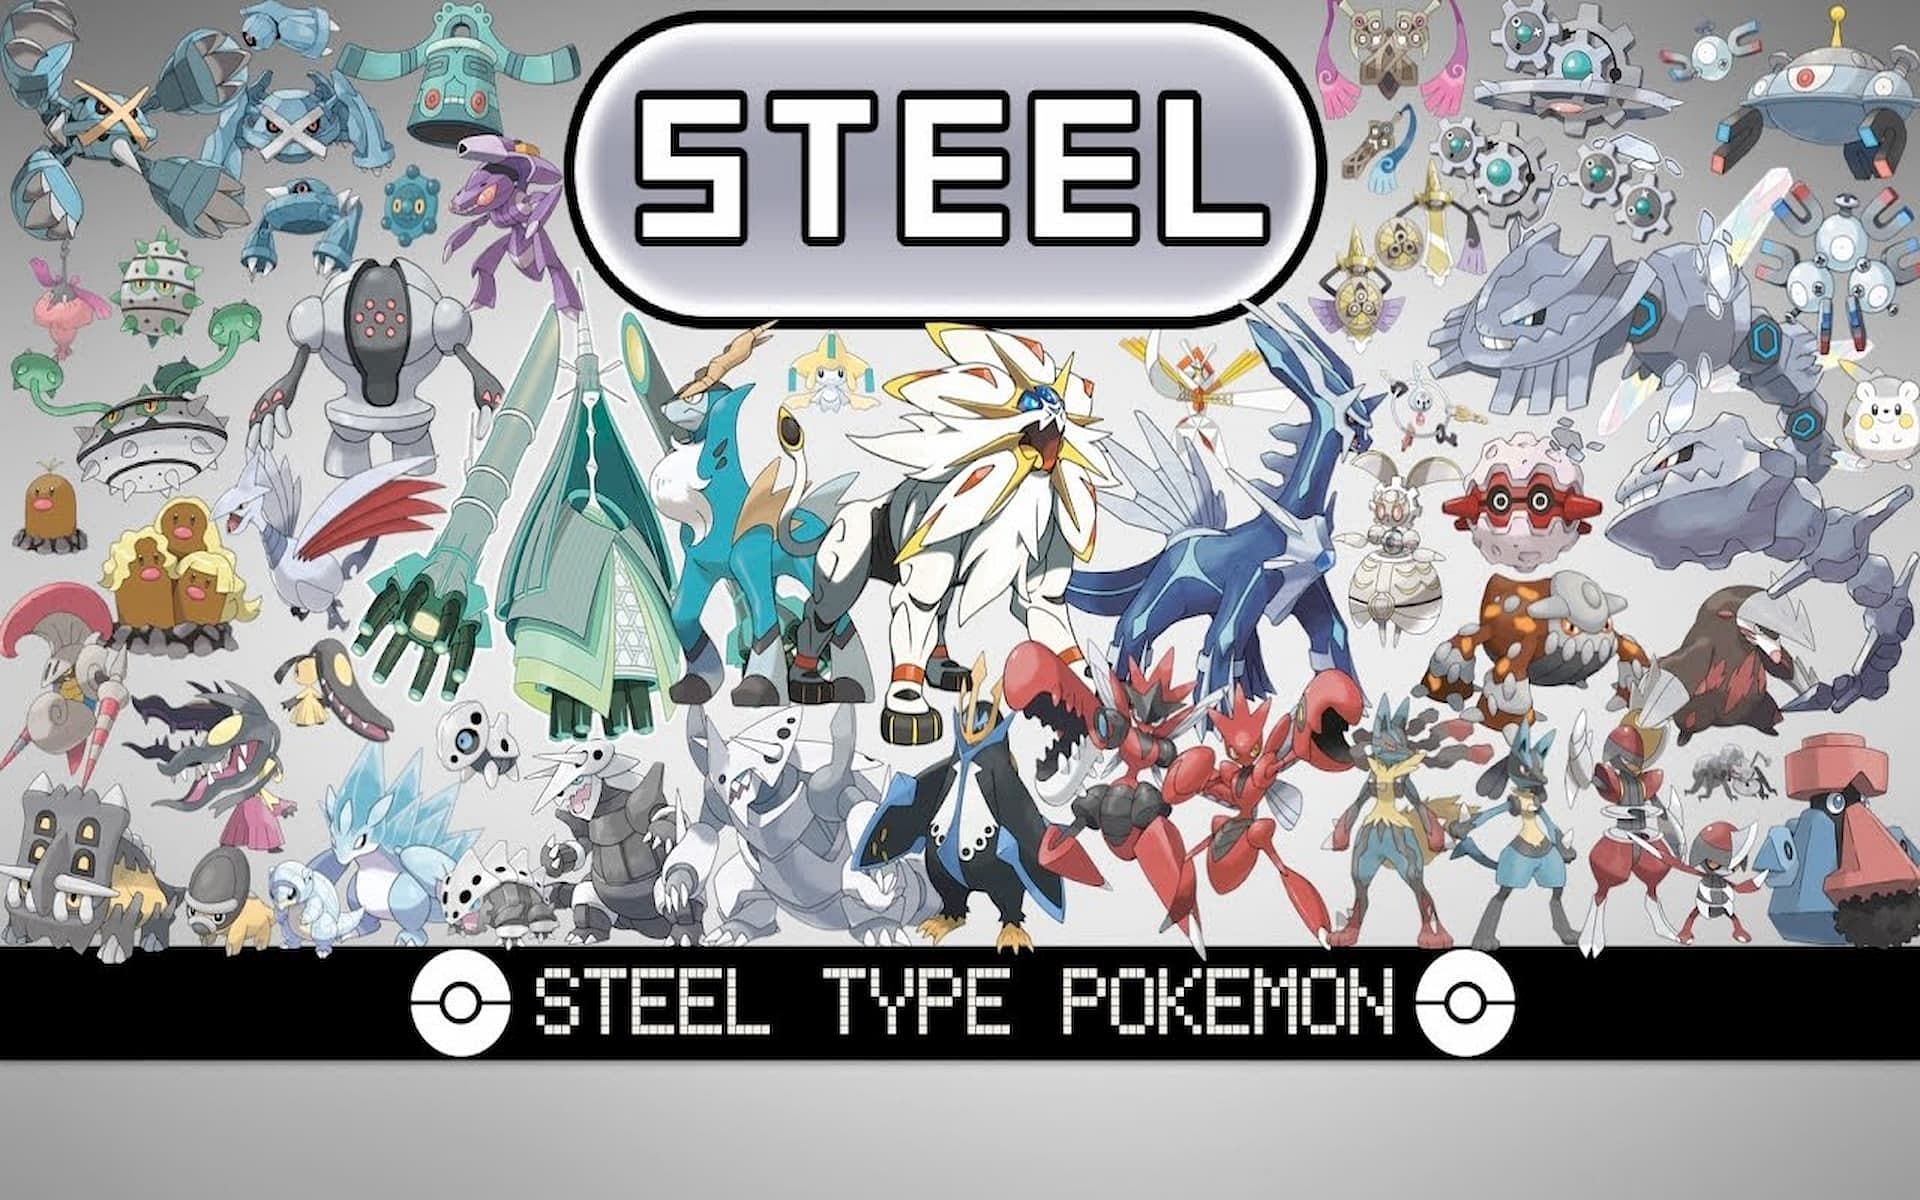 All Steel-type Pokemon. (Image via Tom Salazar)